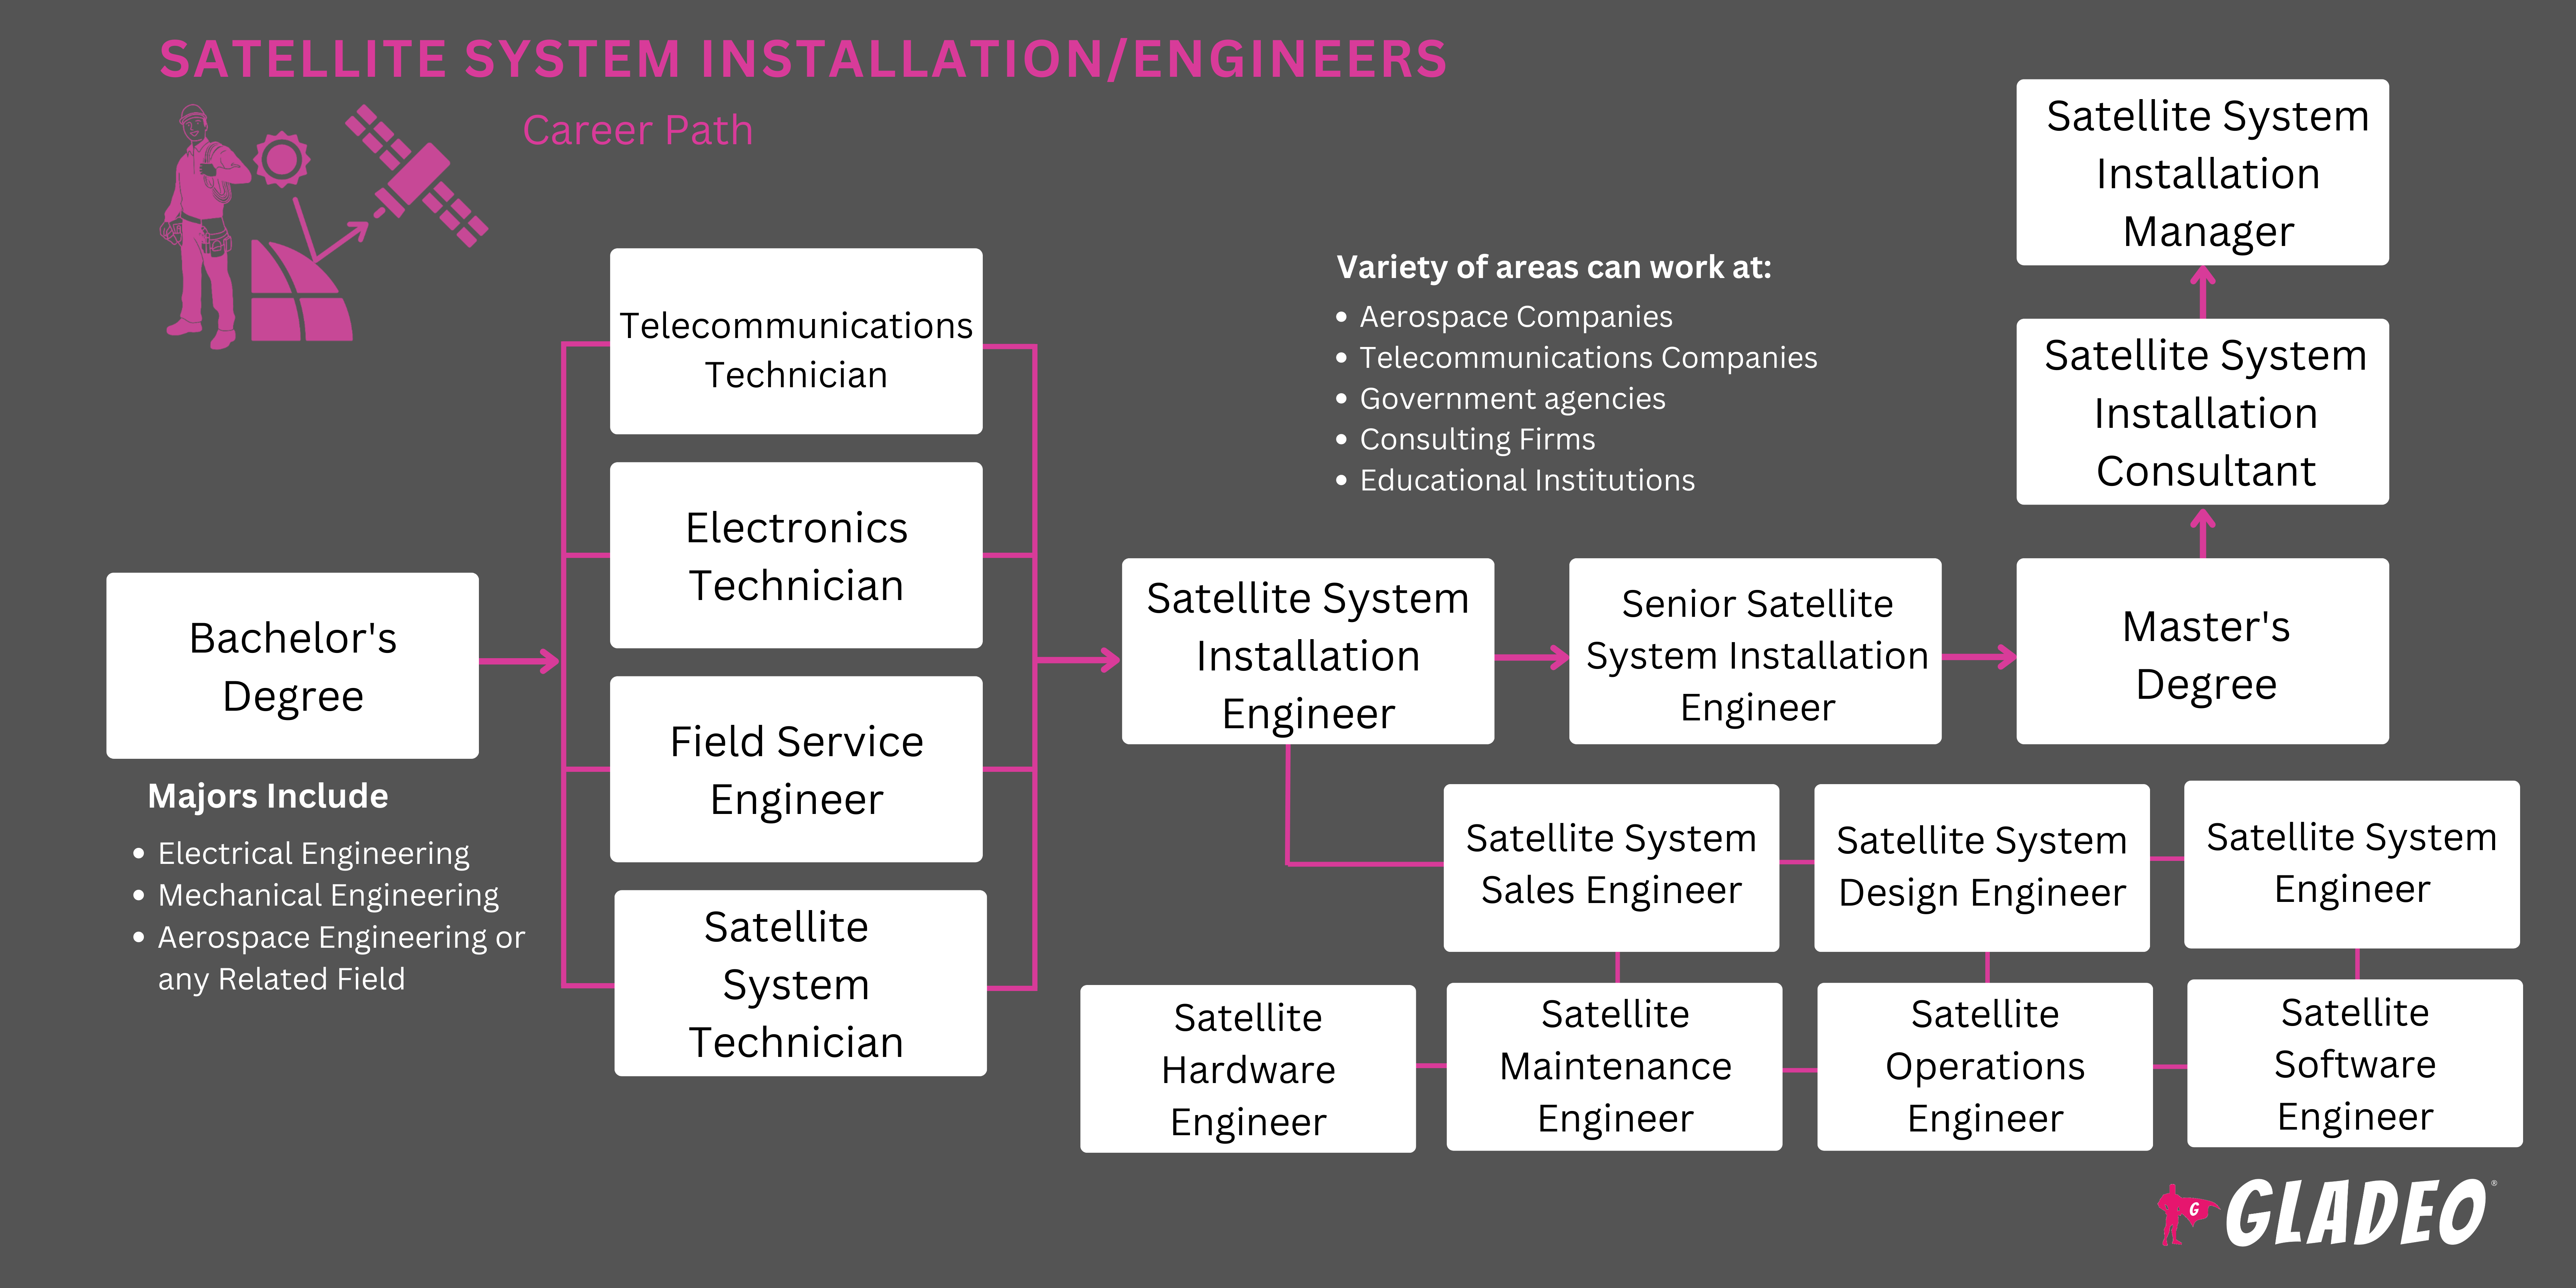 Satellite Systems Installation/Engineers Roadmap